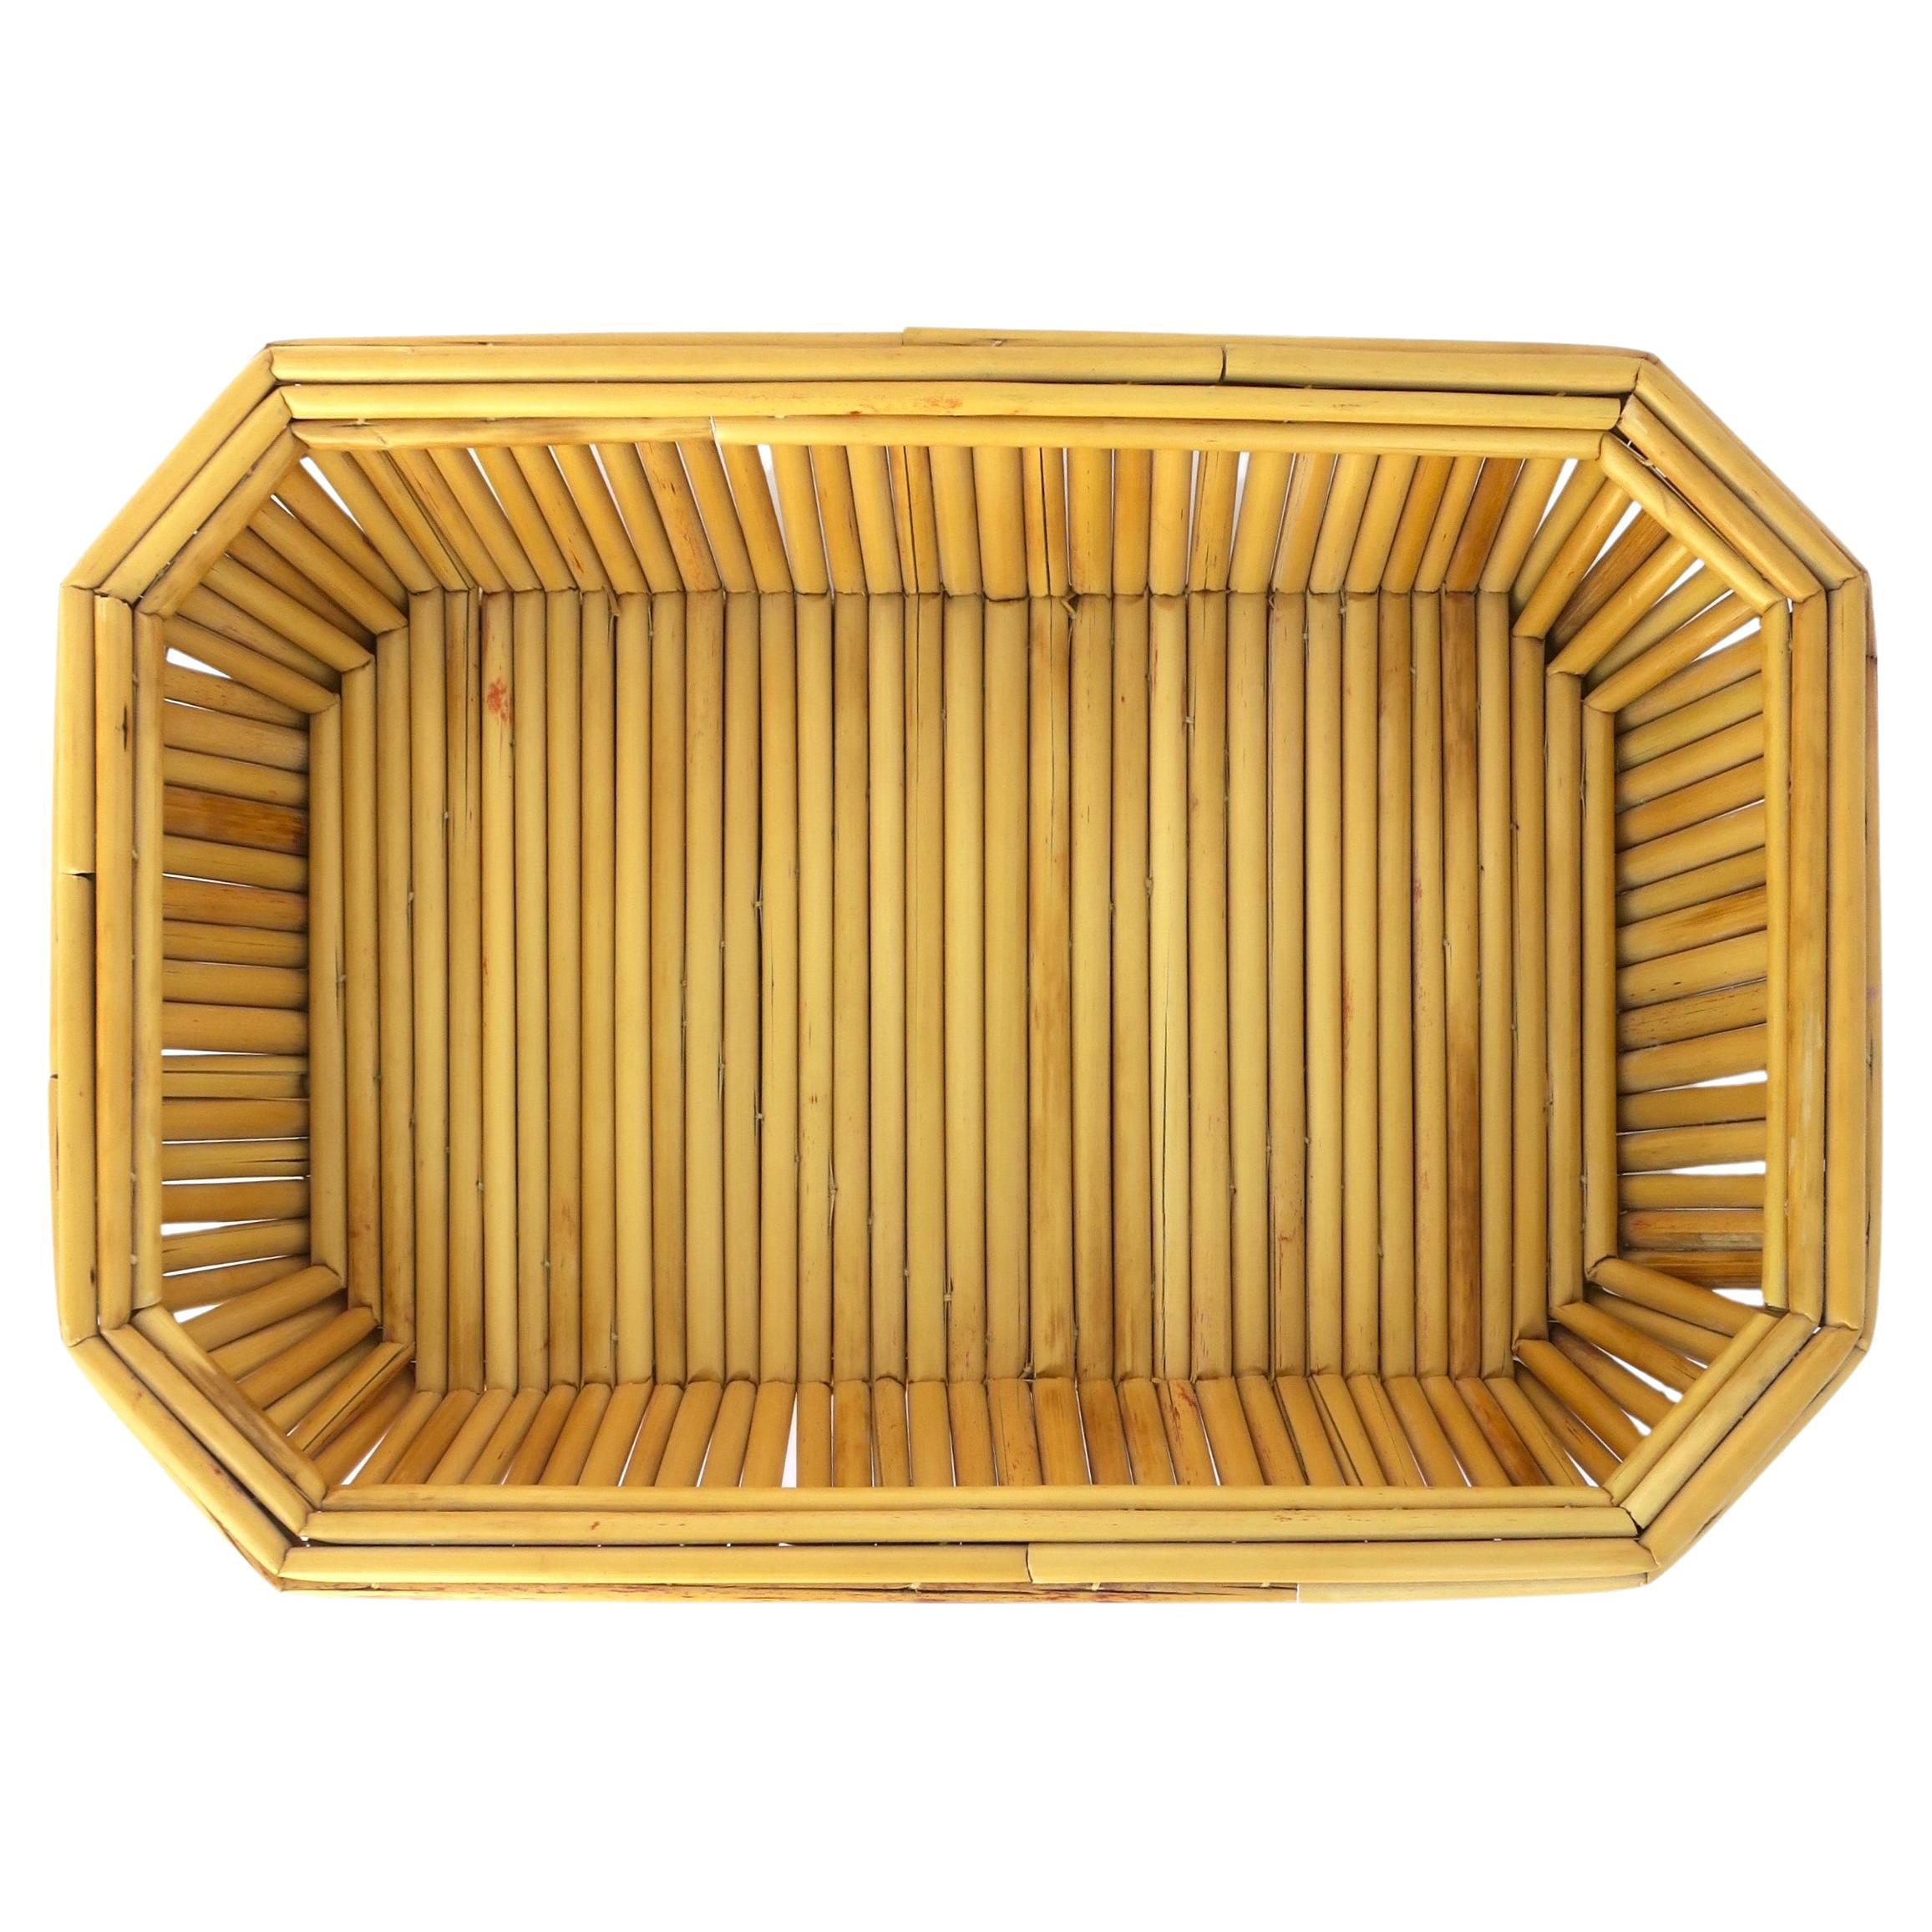 Wicker Tray Basket Centerpiece